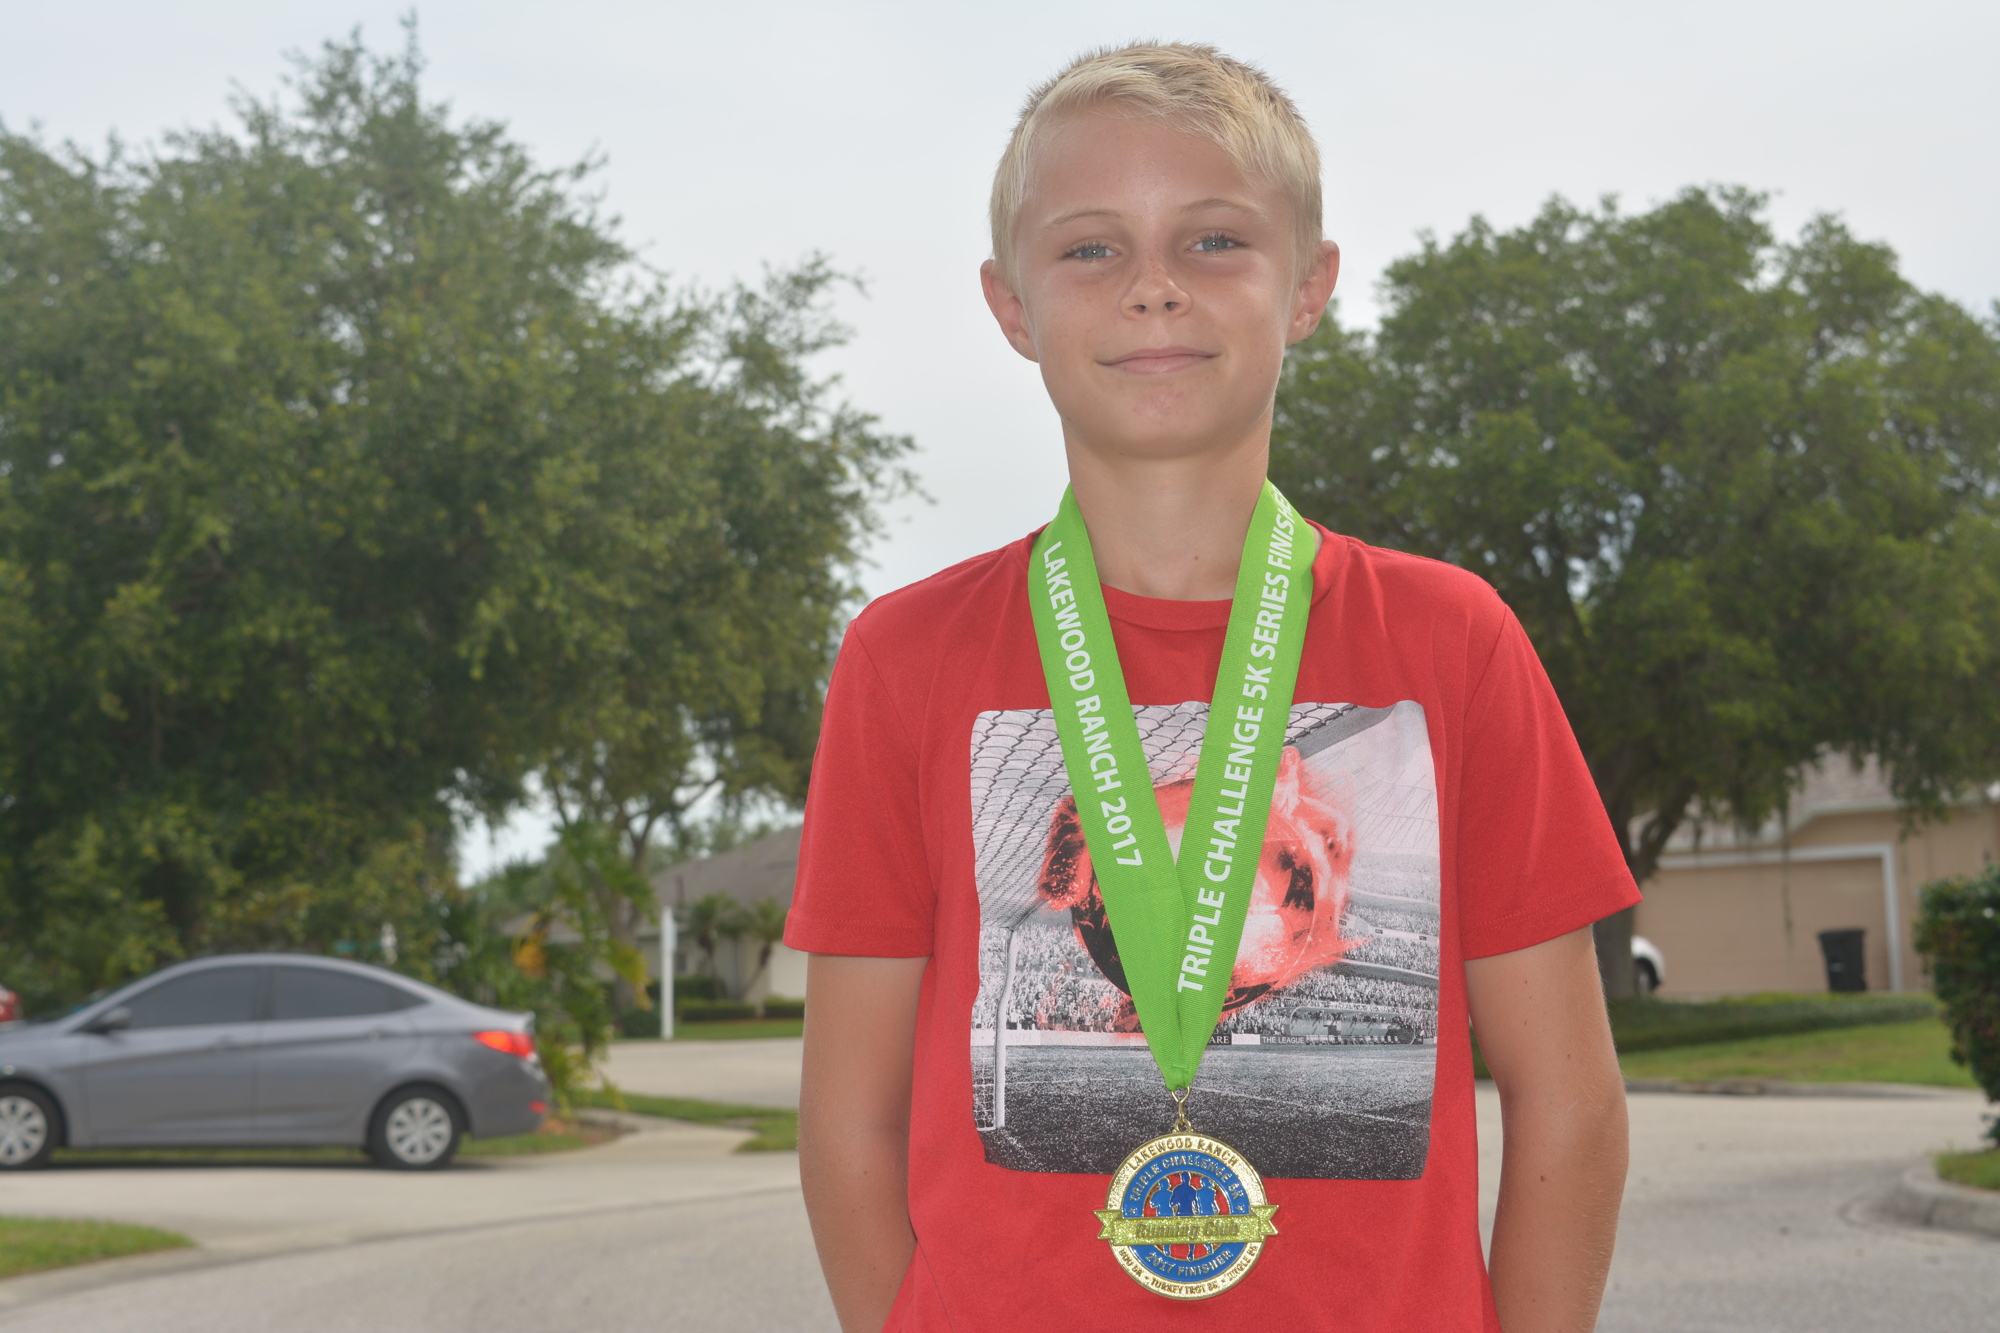 Jonathan Leatt wears his favorite medal, from the 2017 Triple Challenge (finishing the Boo Run, Turkey Trot and Jingle Run 5Ks).